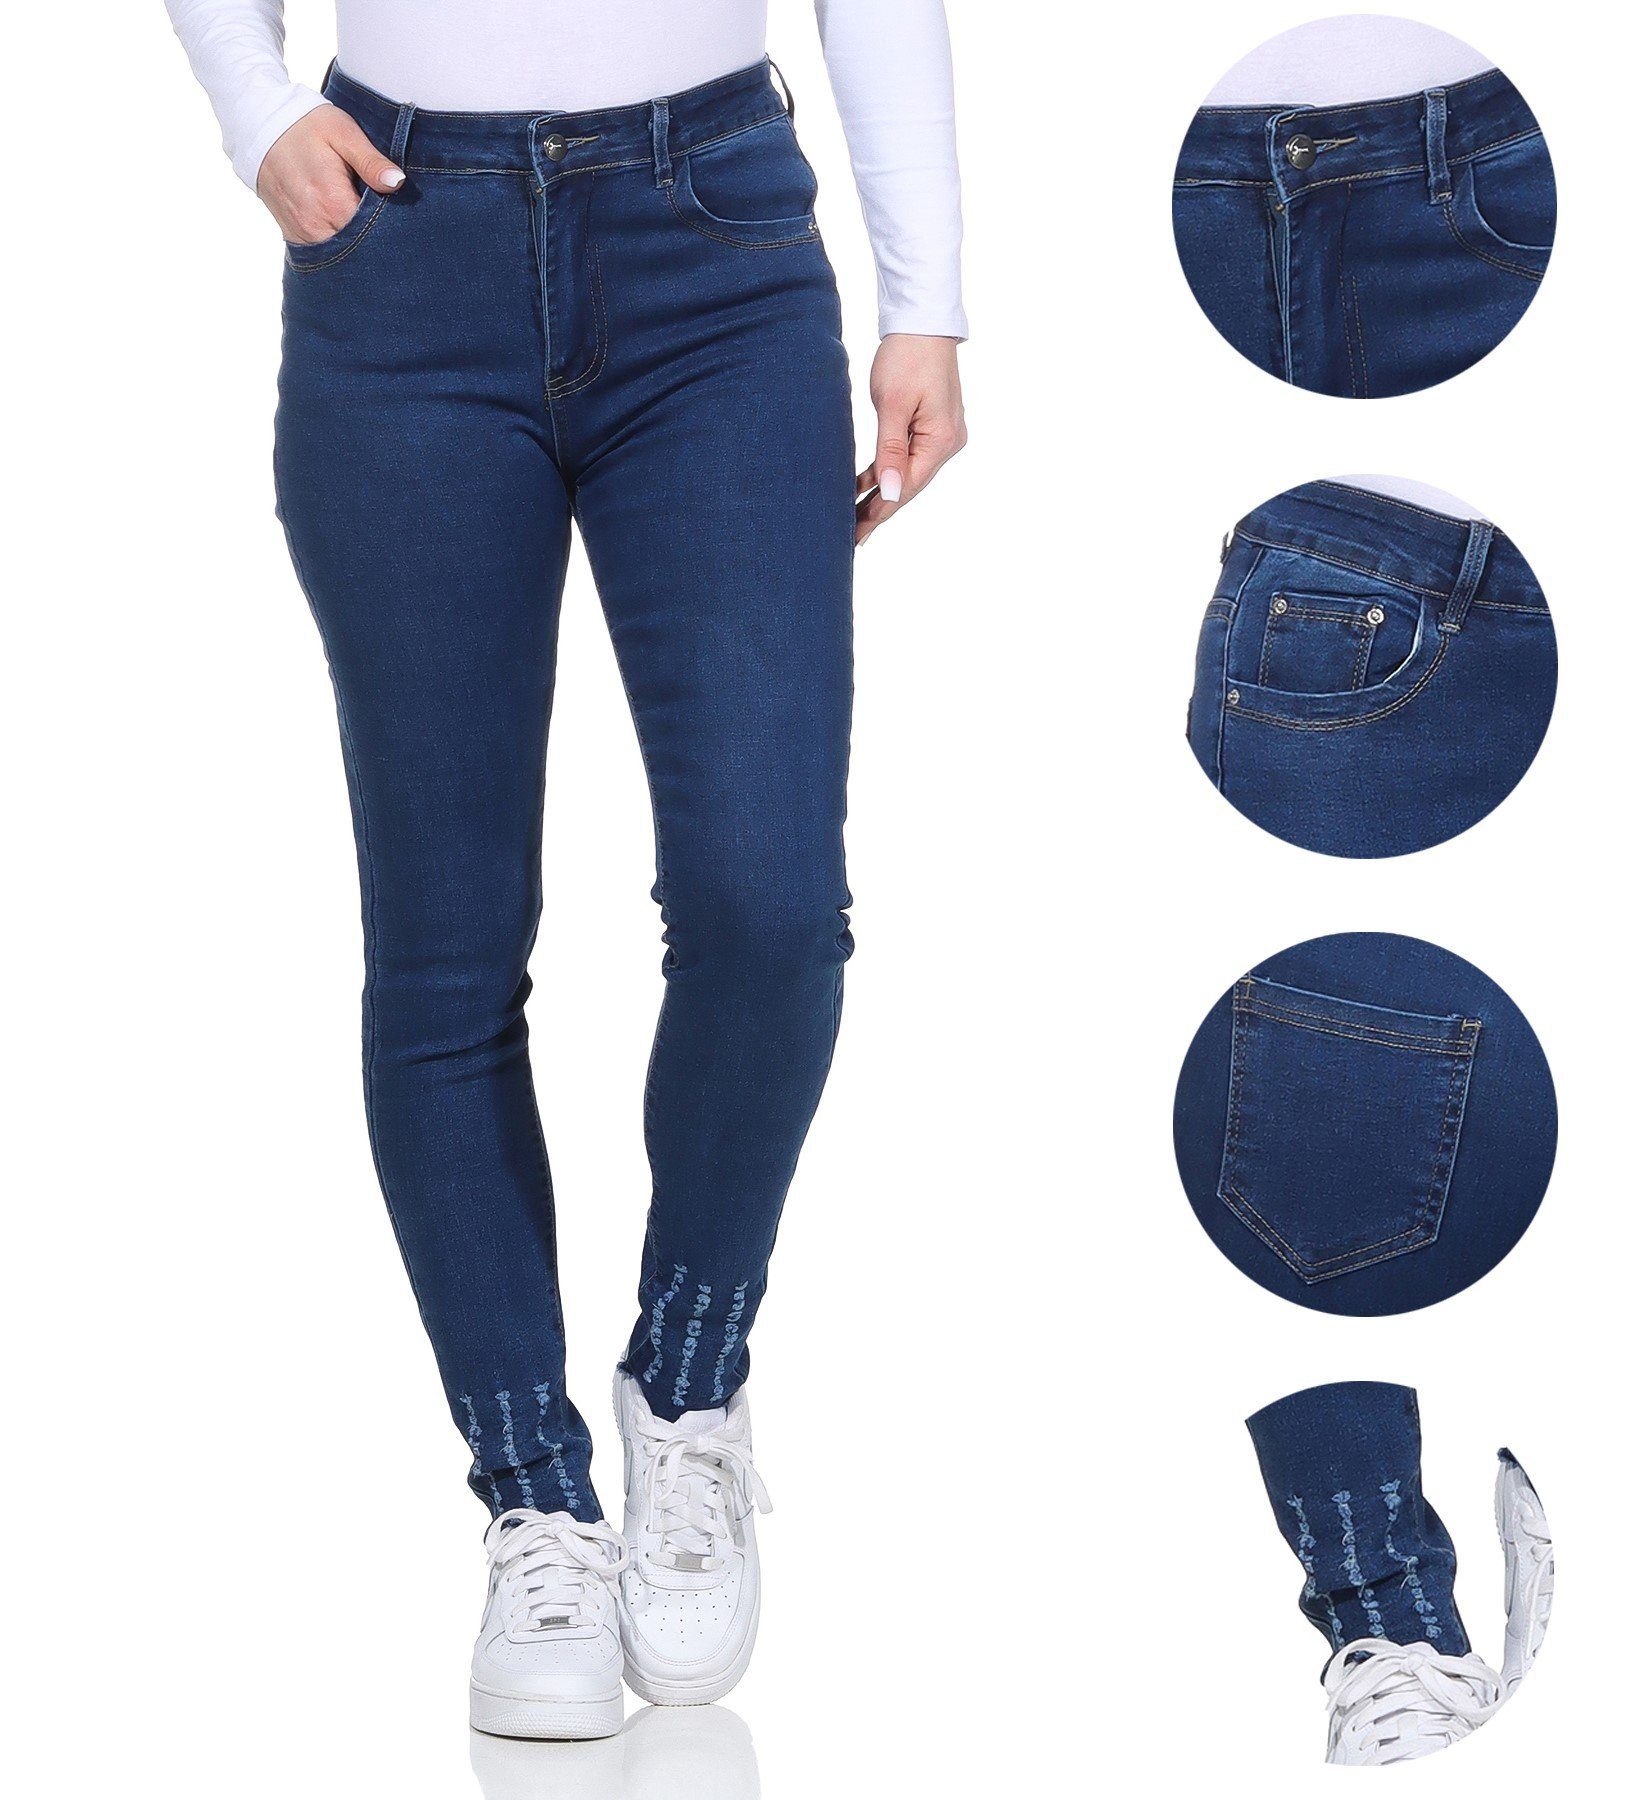 Aurela Damenmode Stretch Jeans Distressed Jeanshosen Look moderner Damen Dunkelblau 5-Pocket-Jeans Look für Destroyed